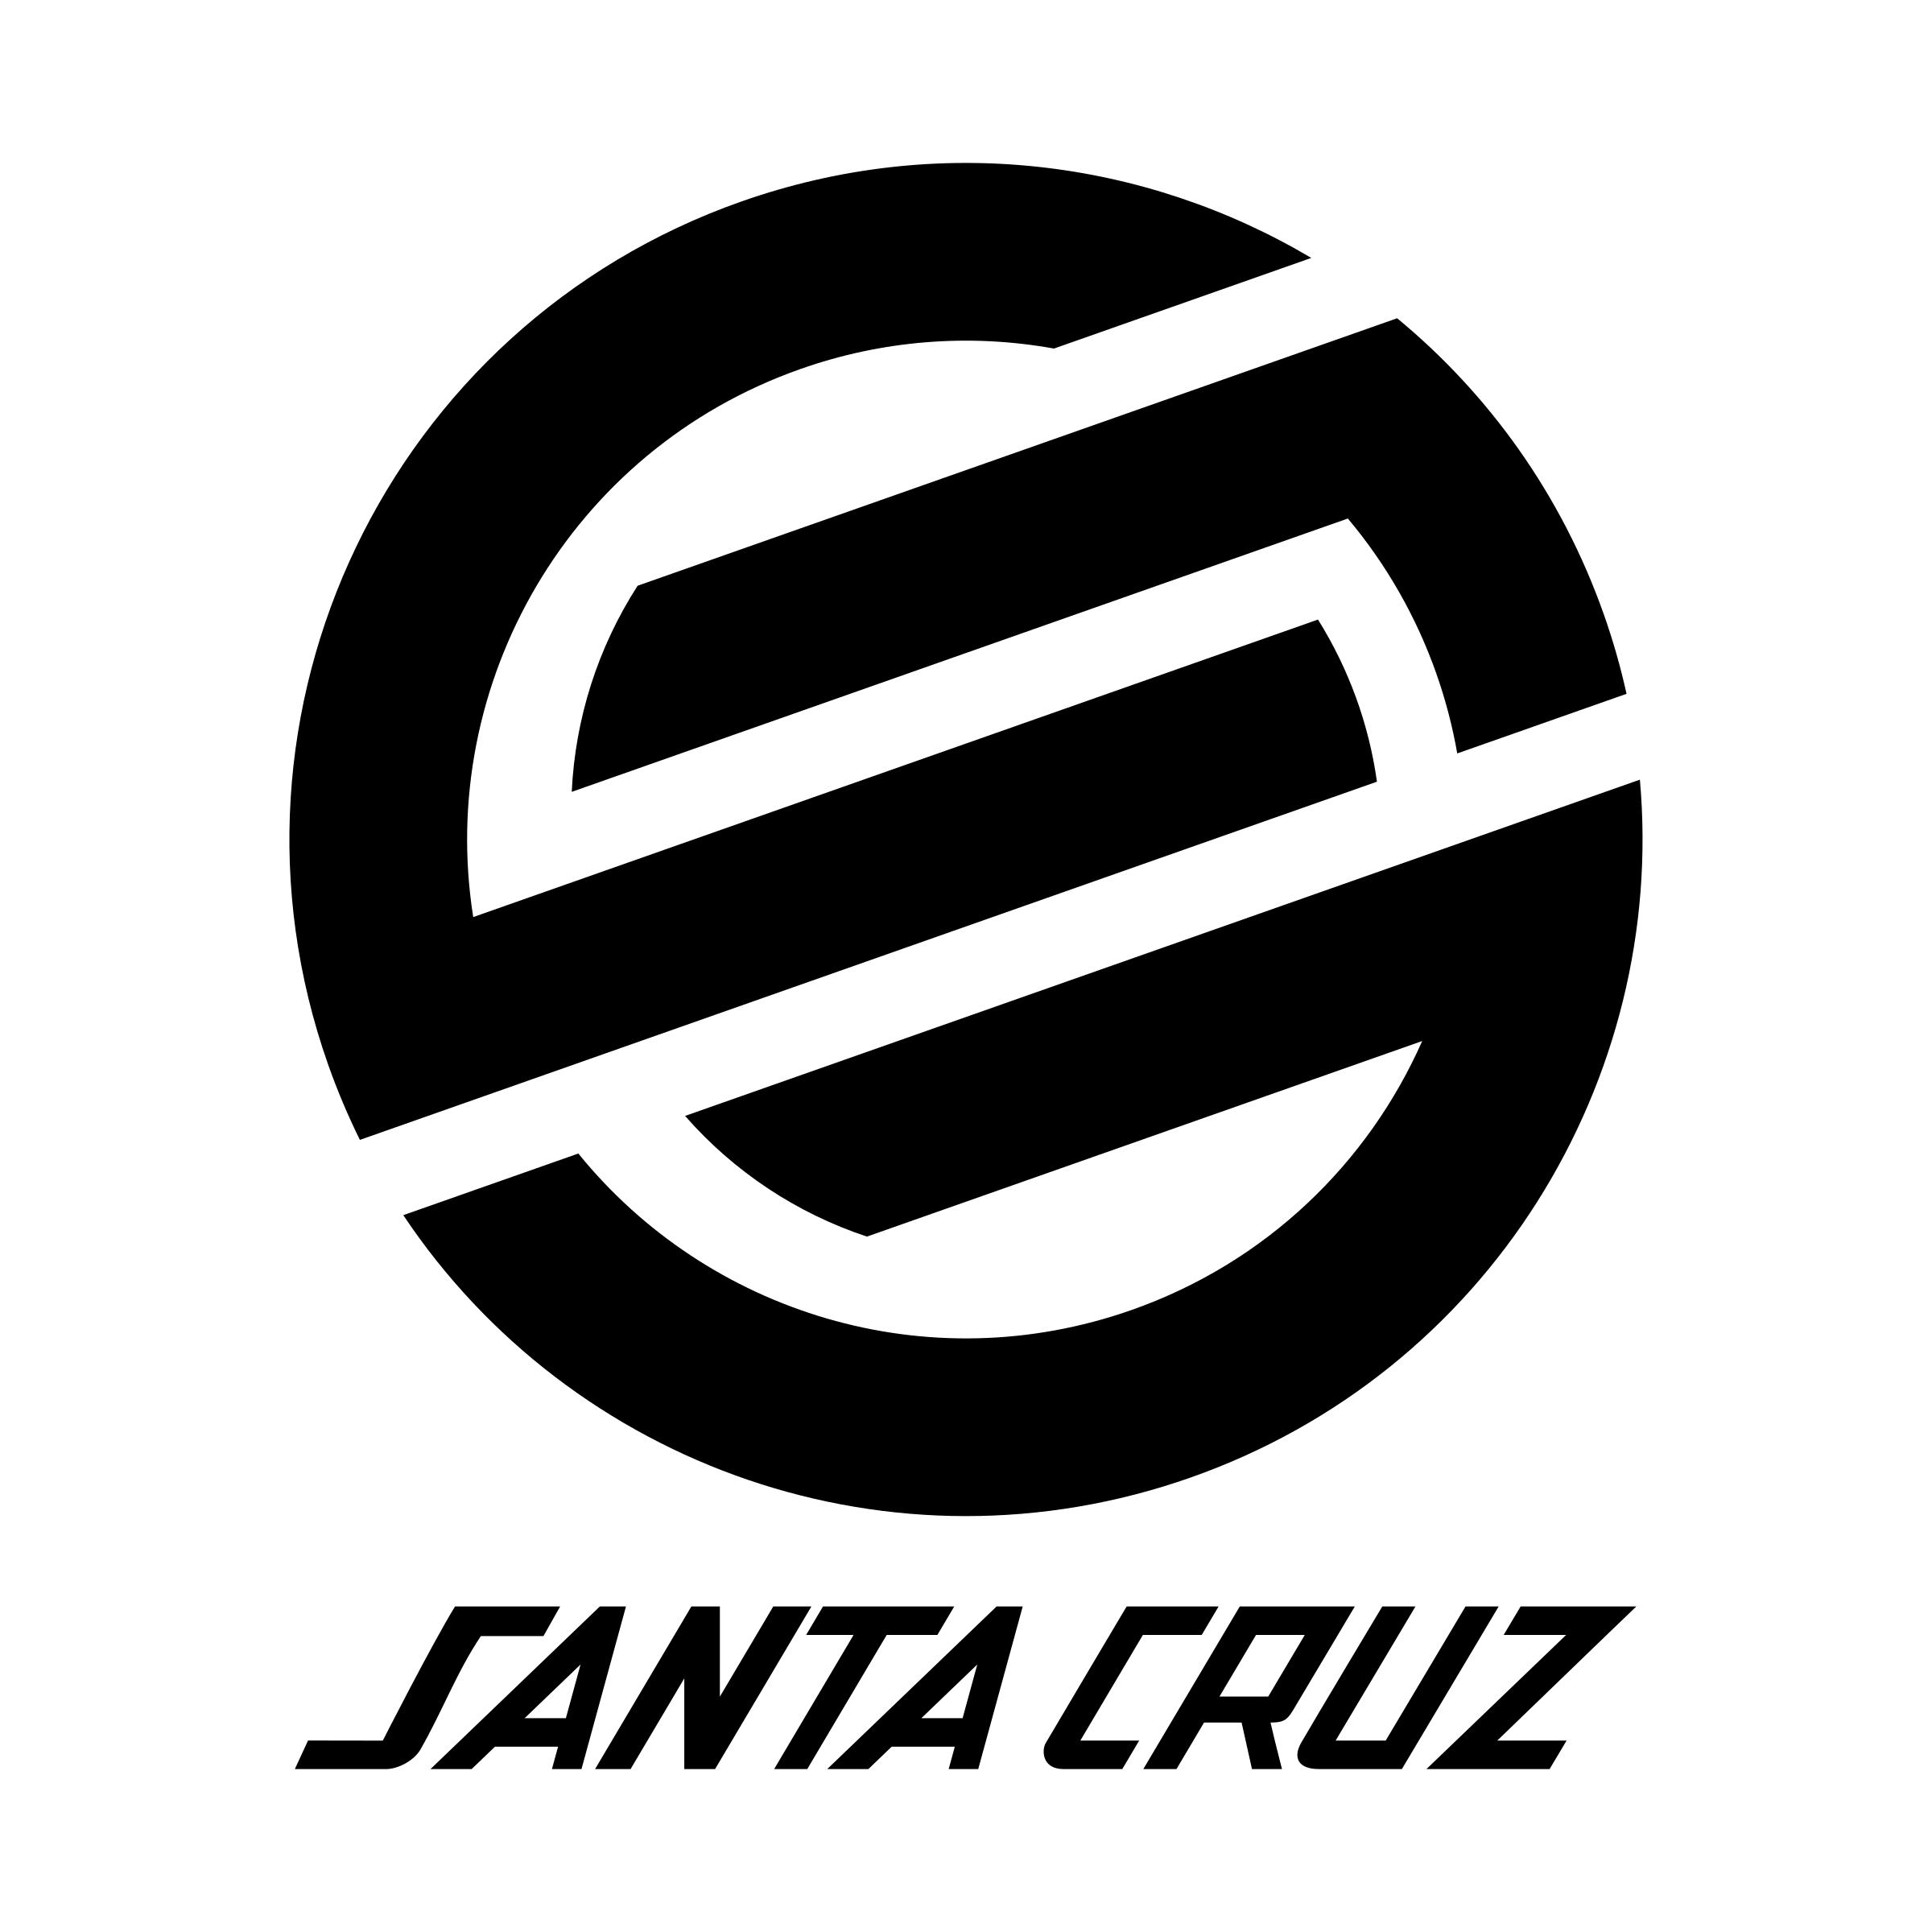 Black and White Santa Cruz Logo - Santa Cruz Logo PNG Transparent & SVG Vector